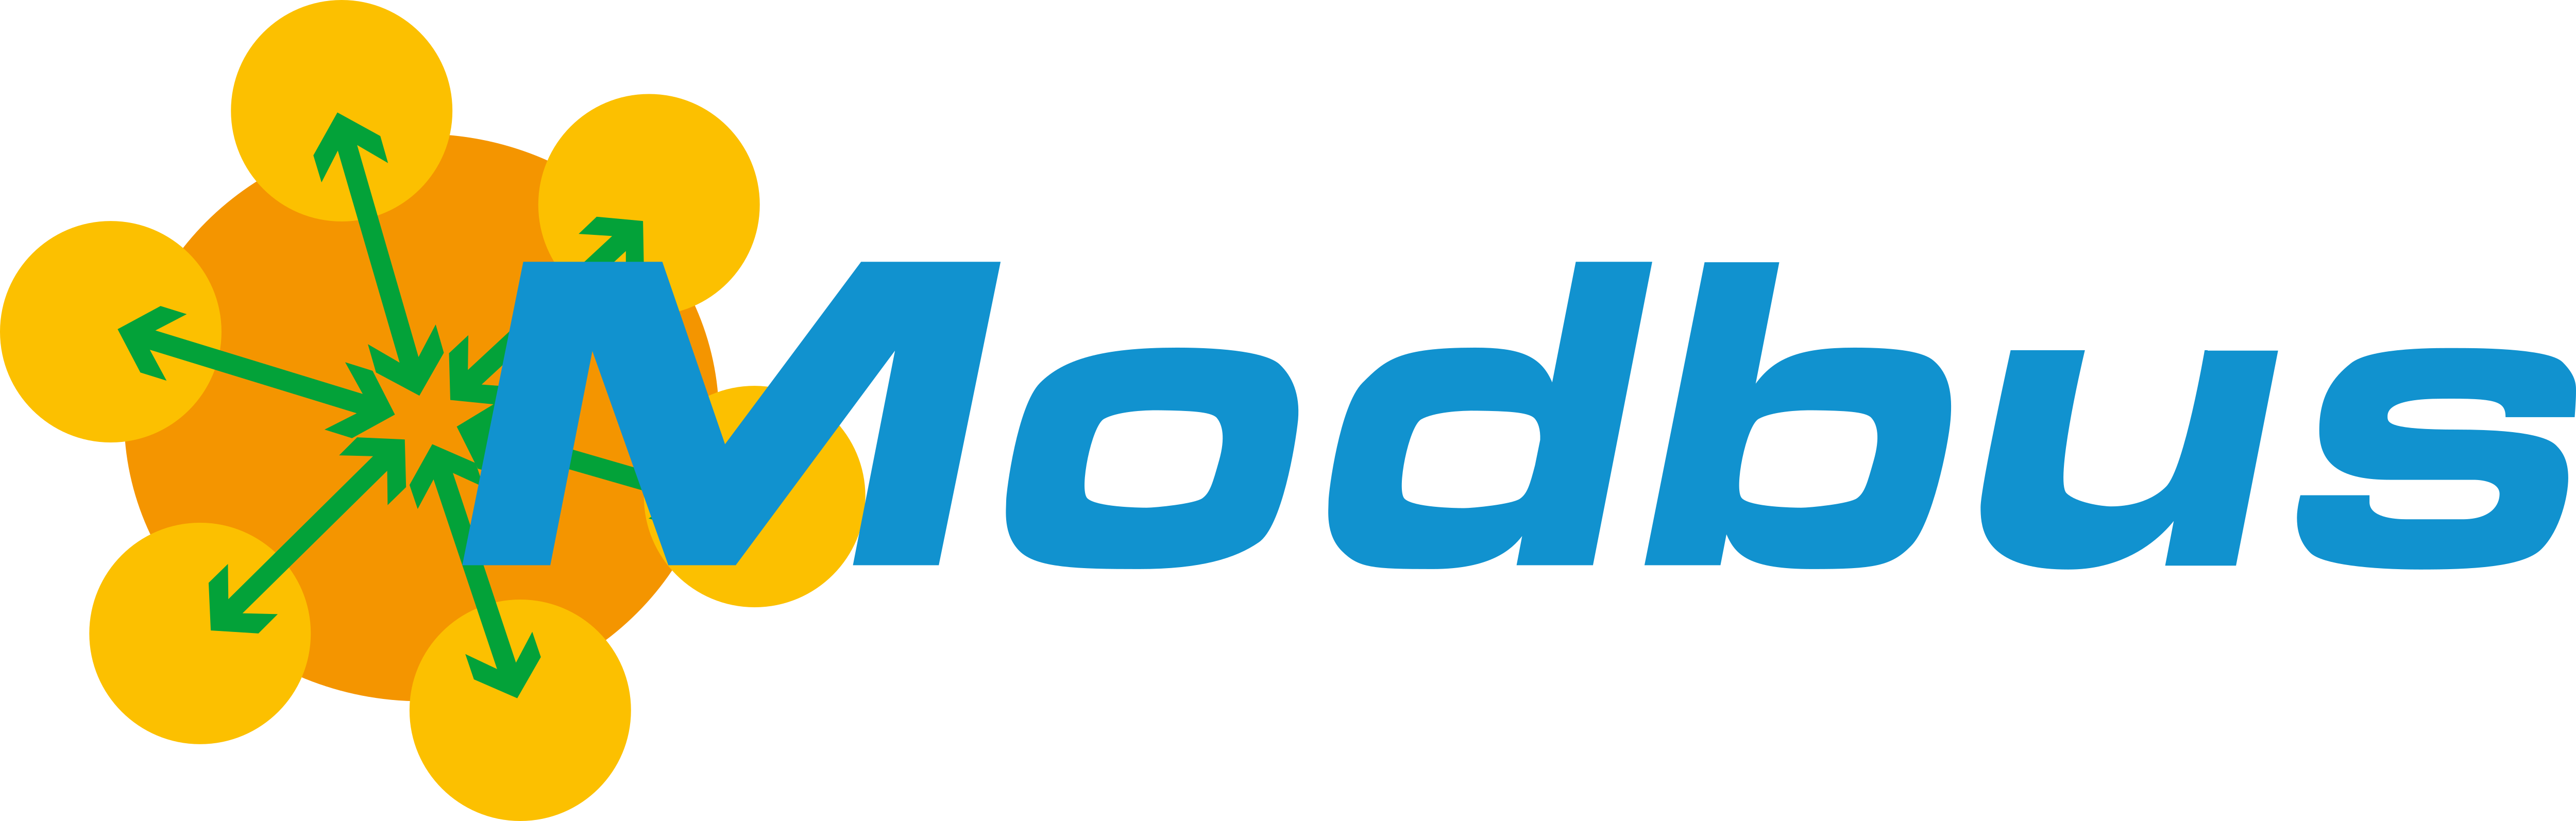 Logotipo de Modbus